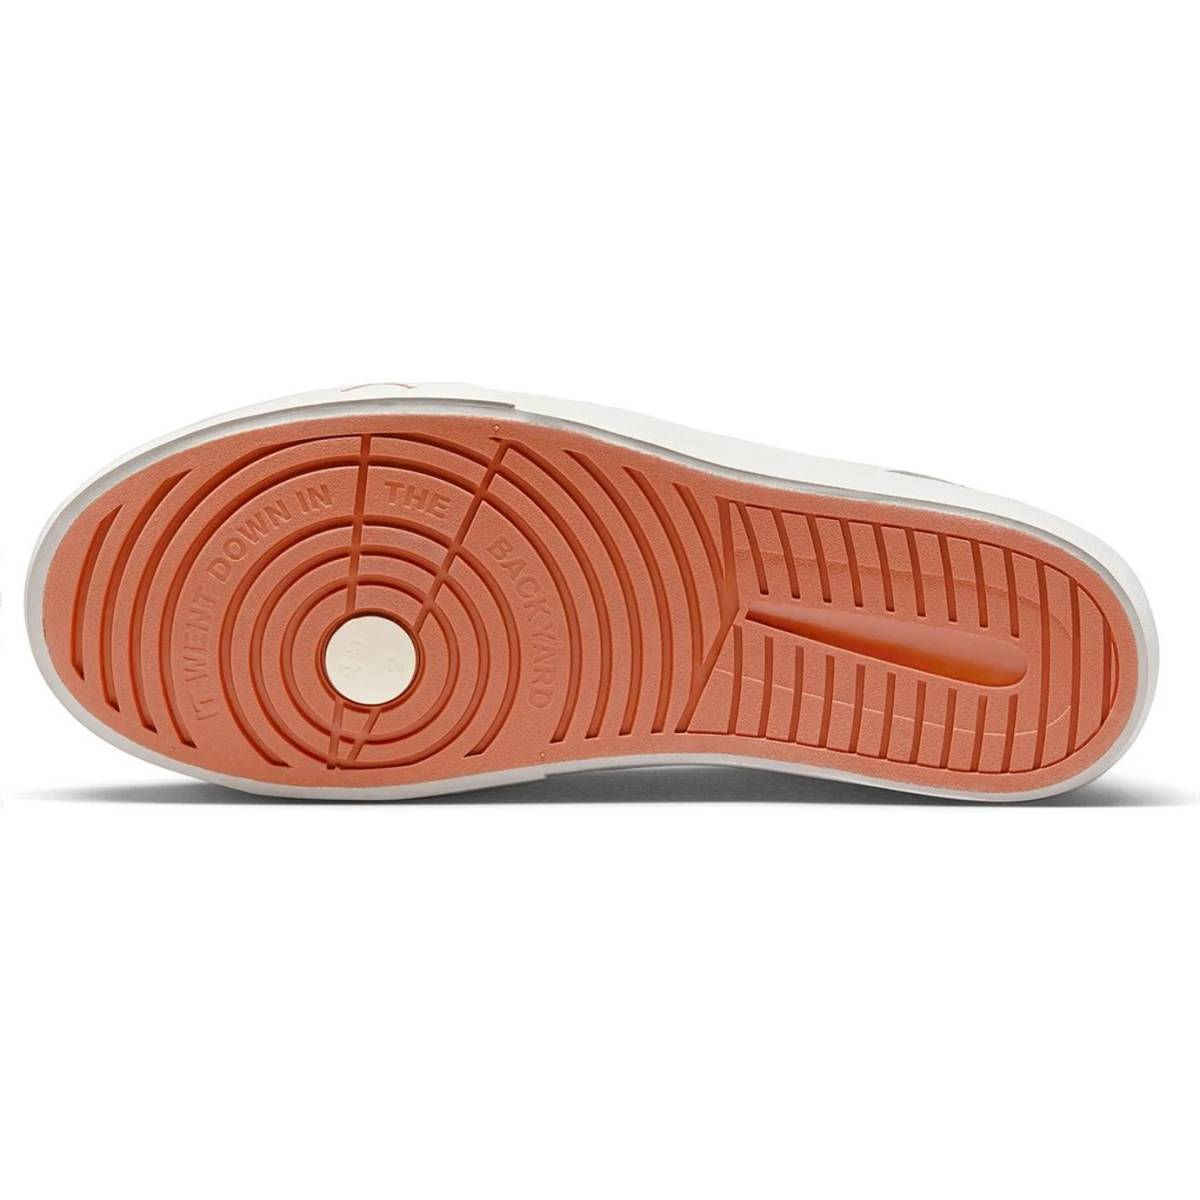 # Nike Jordan серии ES Sale / последний оксид / кокос молоко новый товар 30.0cm US12 NIKE JORDAN SERIES ES DN1856-100